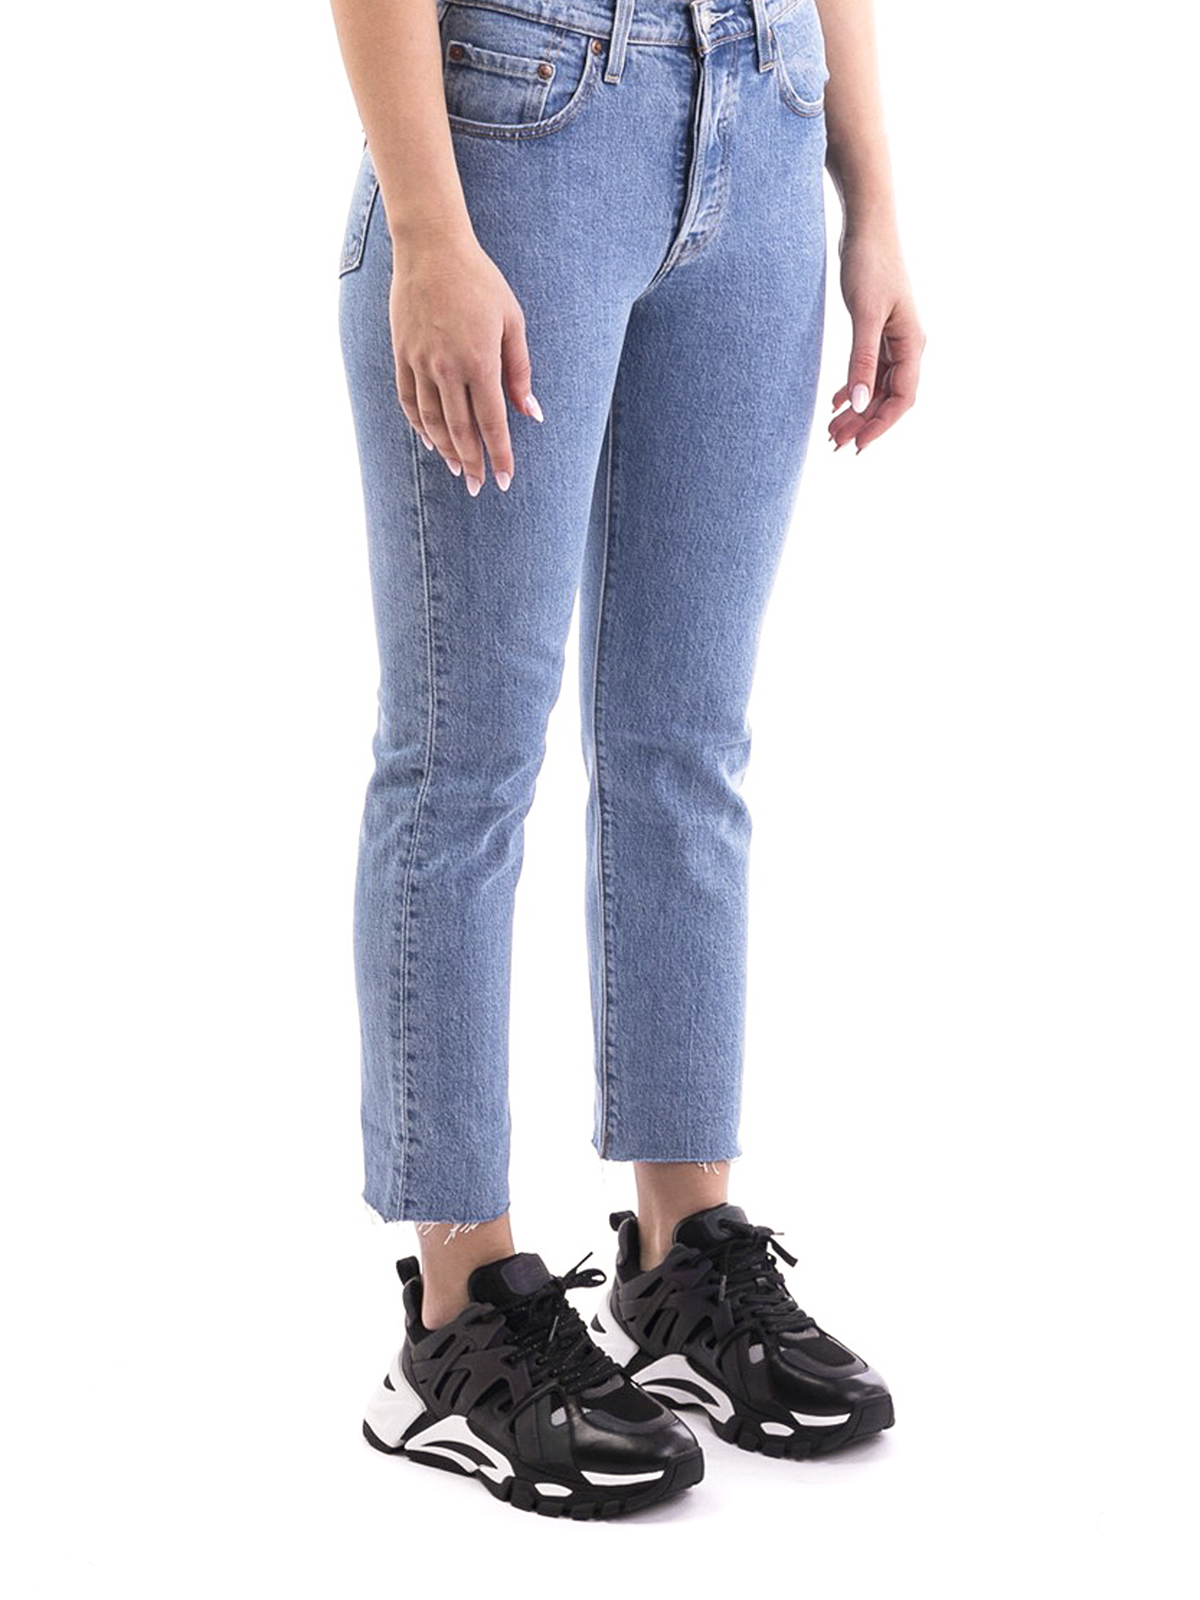 het laatste havik Reizende handelaar Straight leg jeans Levi'S - 501 Original cropped faded jeans - 36200009626